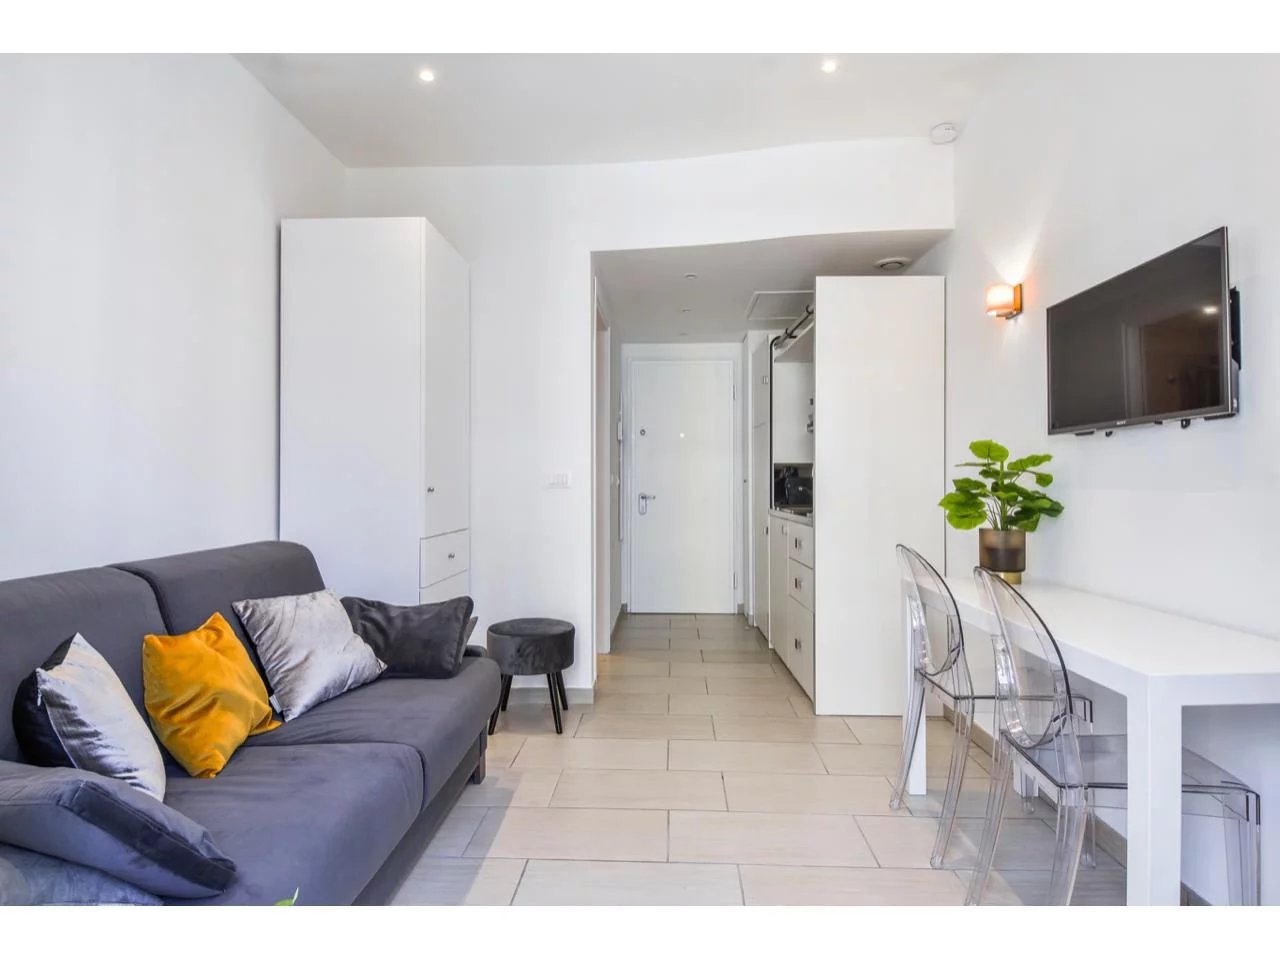 Appartement  1 Locali 15.4m2  In vendita   189 000 €